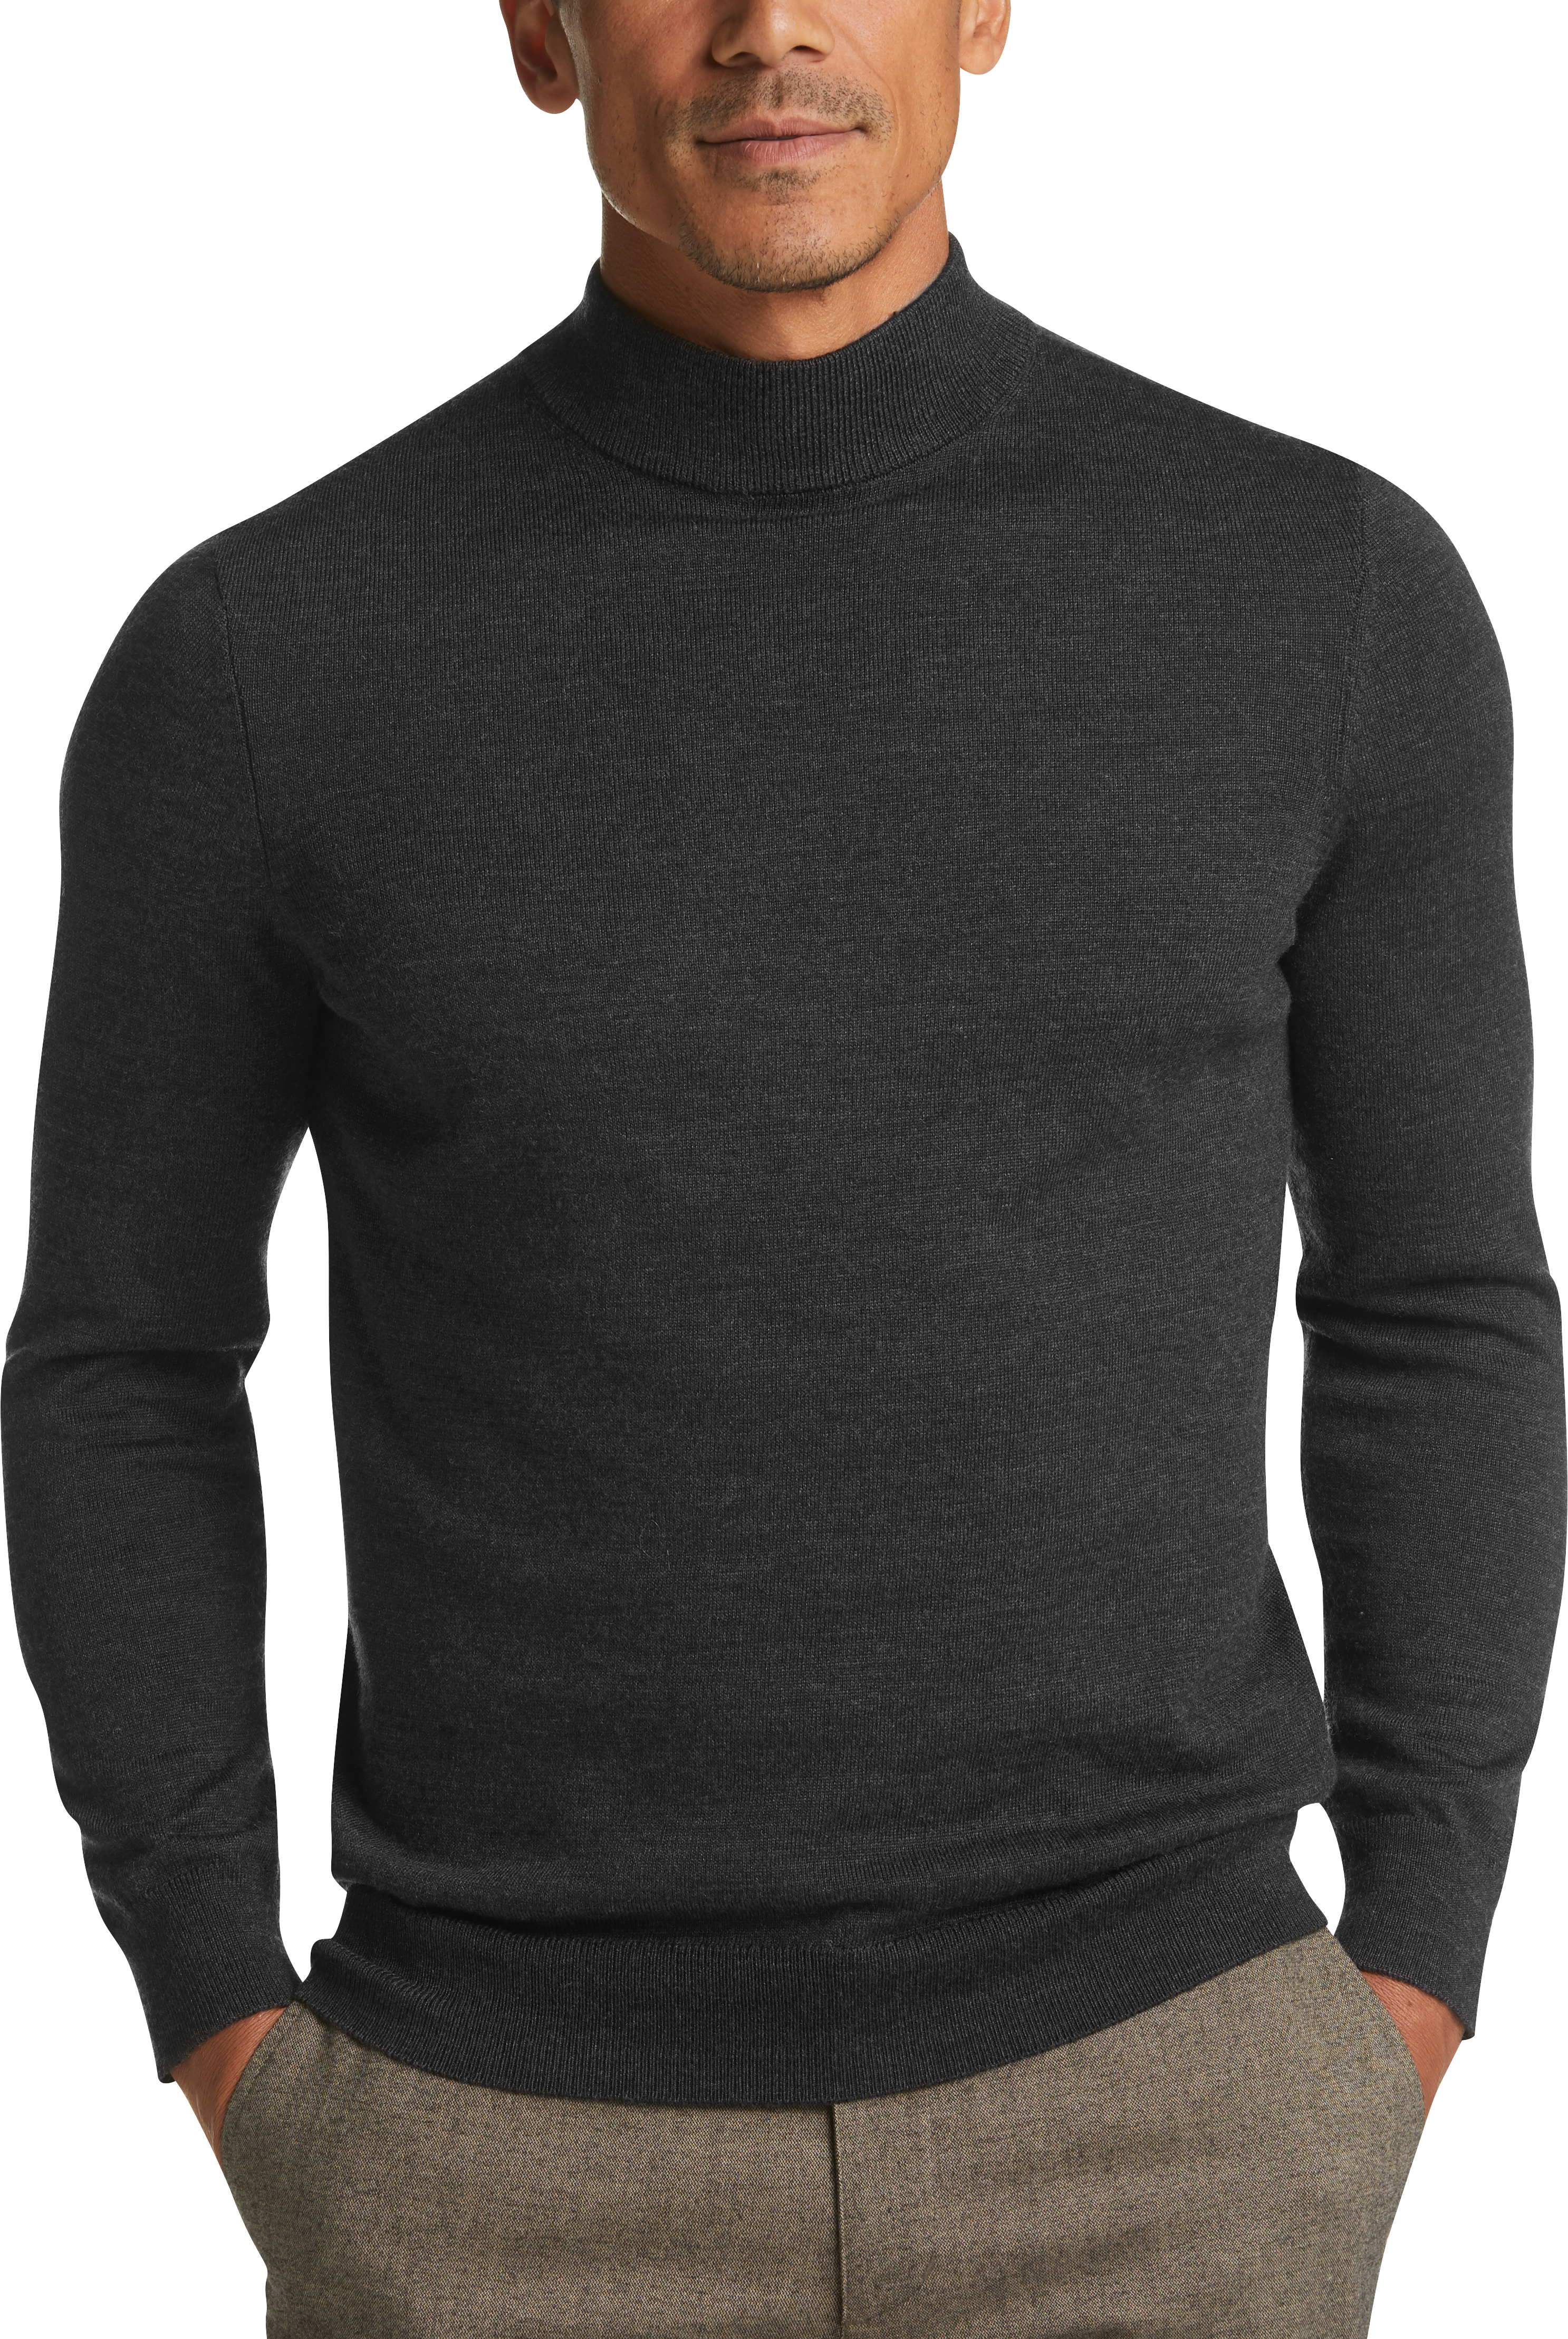 Joseph Abboud Charcoal Mock Neck Performance Sweater - Men's Sale | Men ...